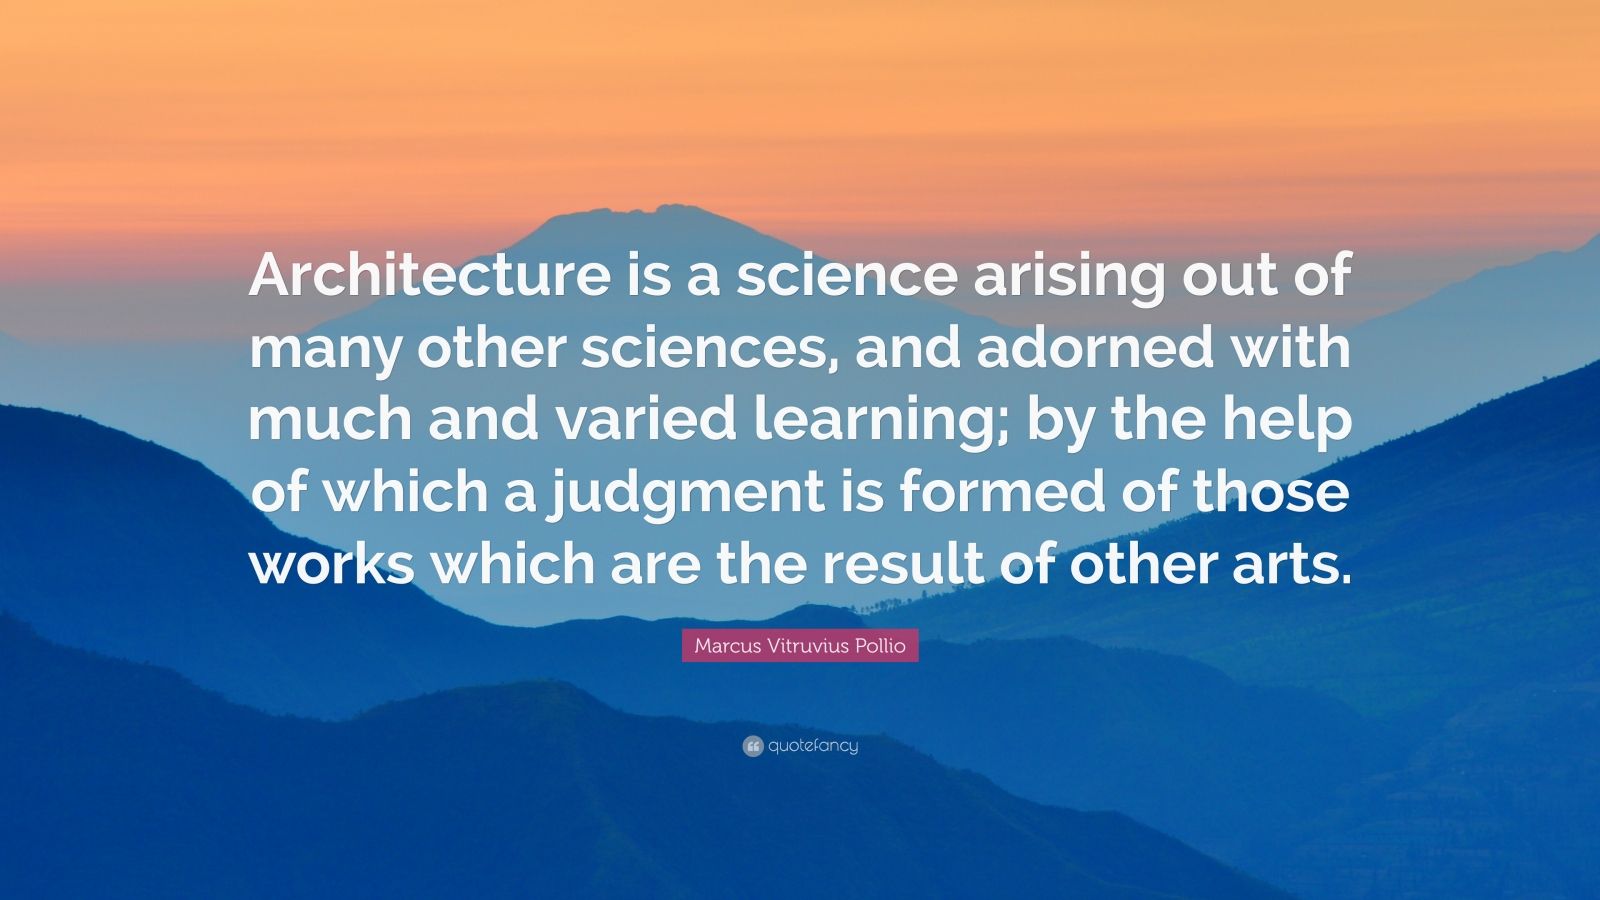 Marcus Vitruvius Pollio Quote: “Architecture is a science arising out ...